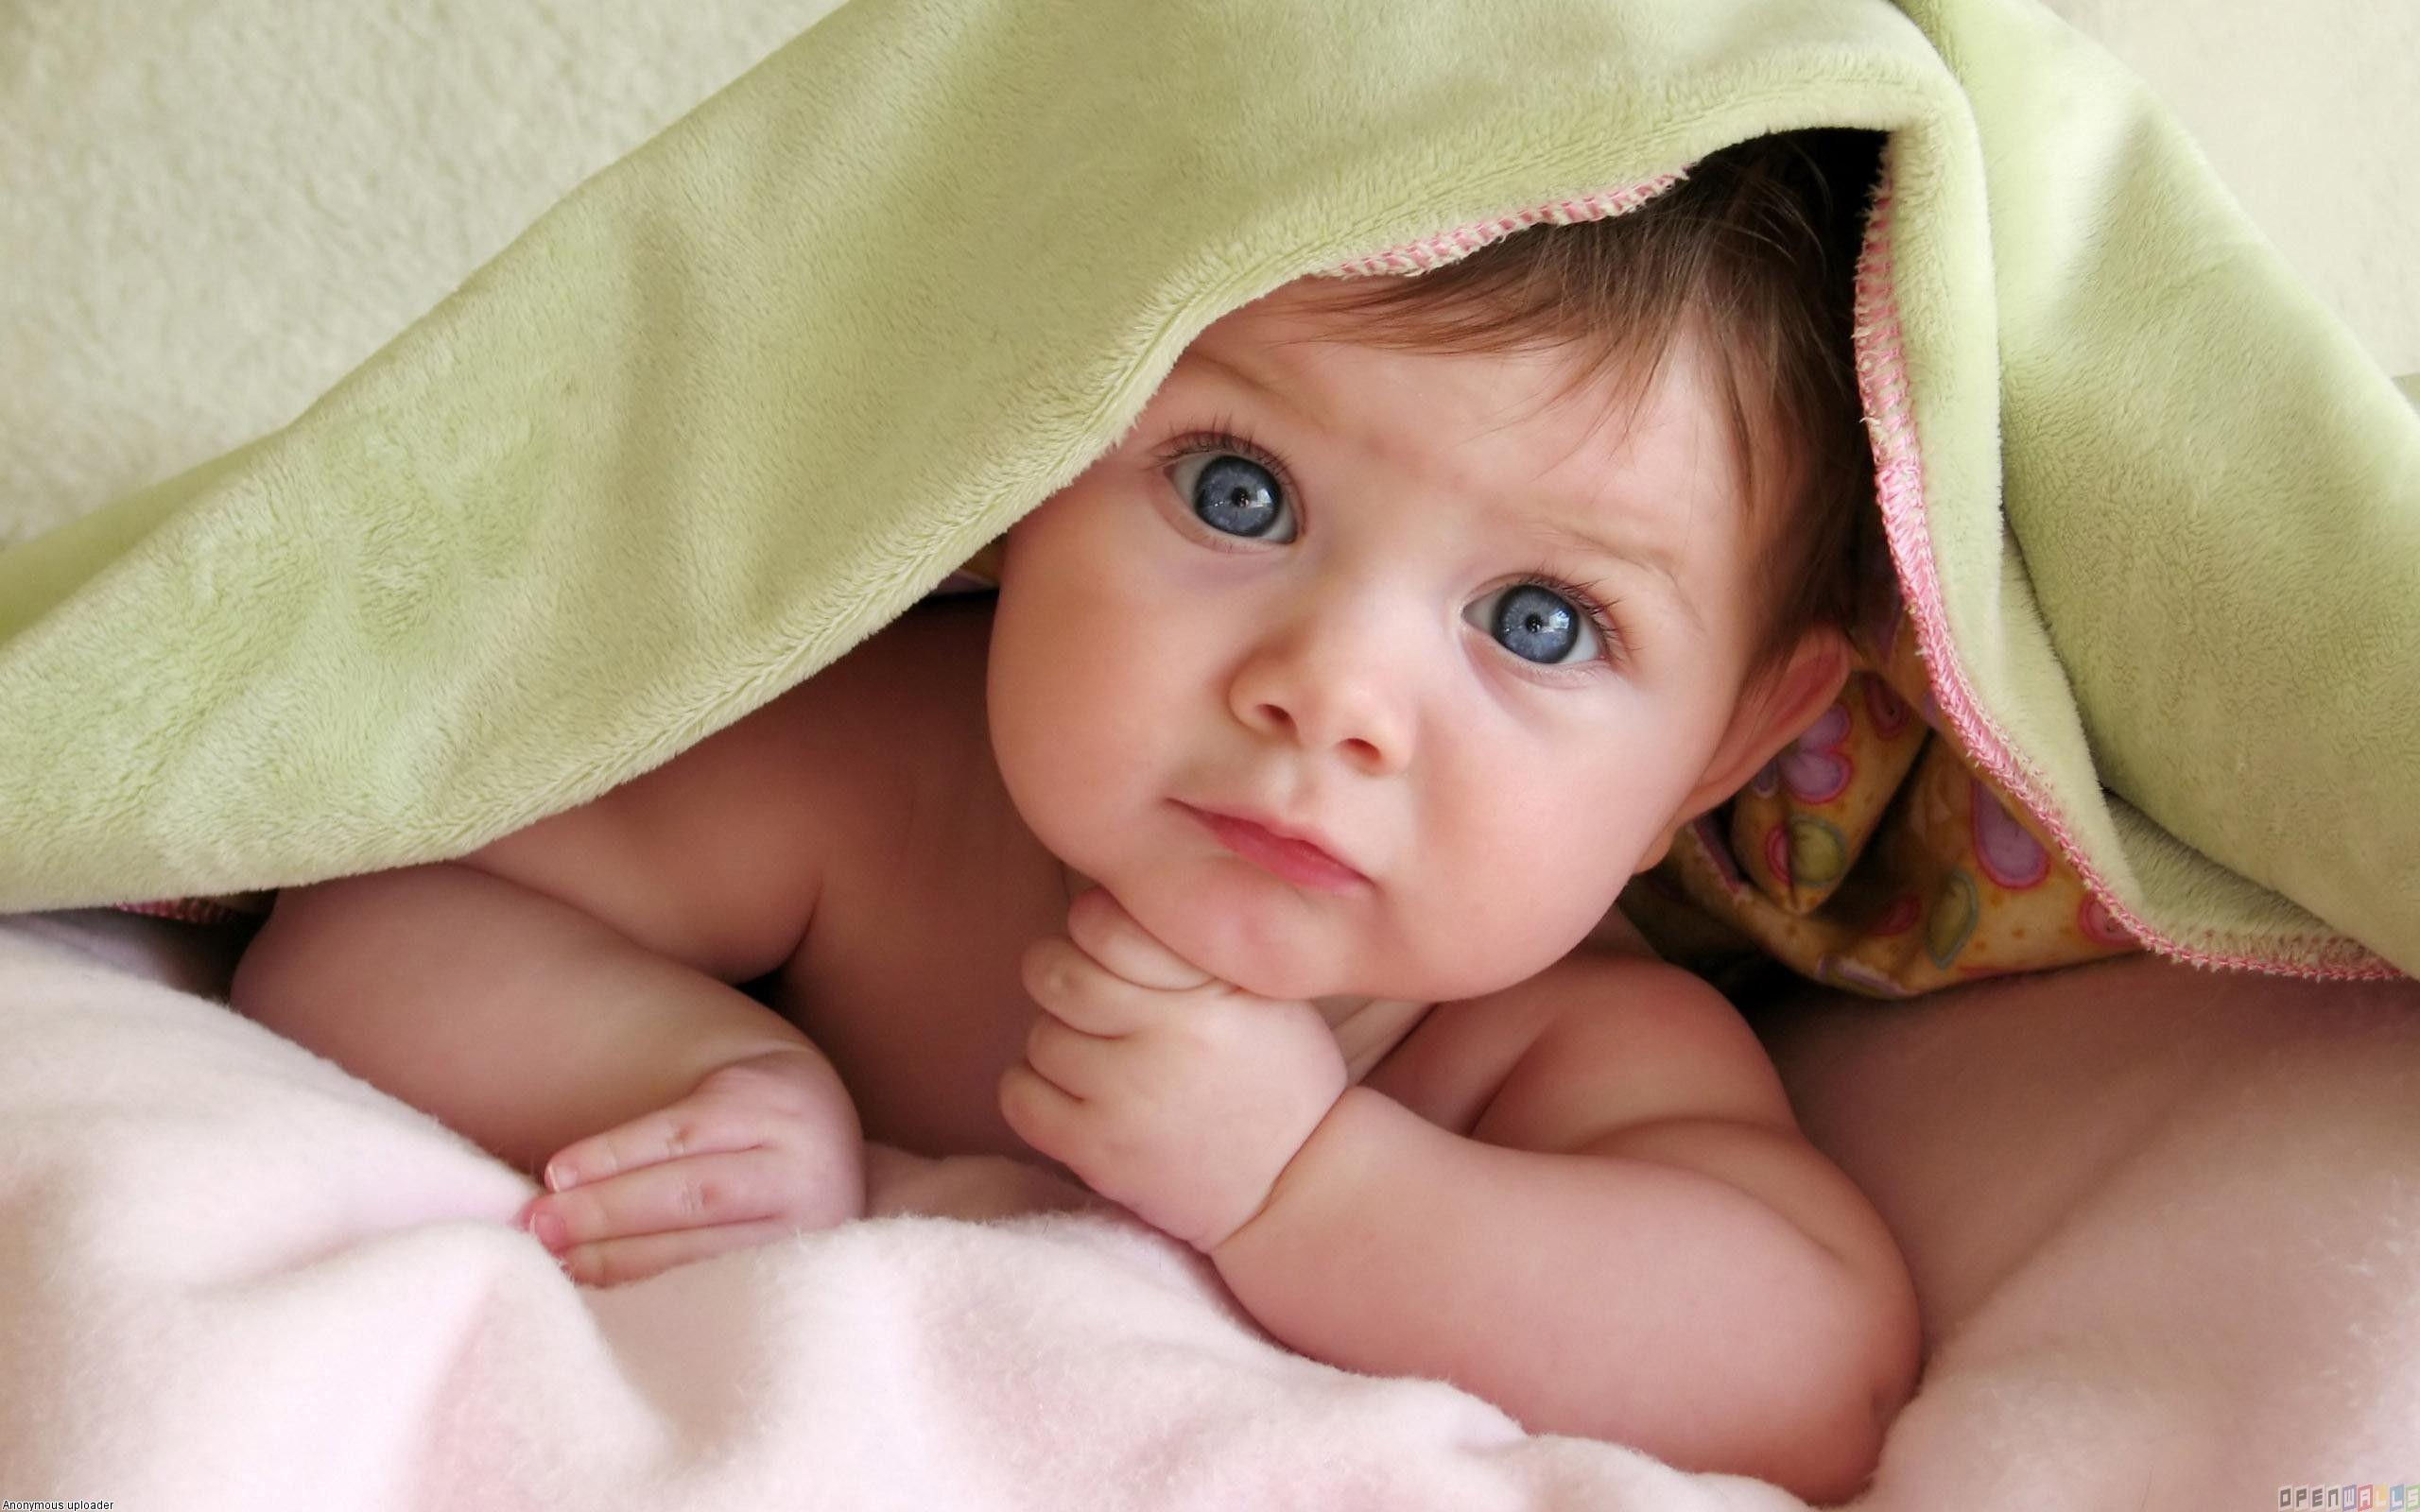 Cute Babies Wallpaper: Cute Babies HD Wallpaper. .Ssofc